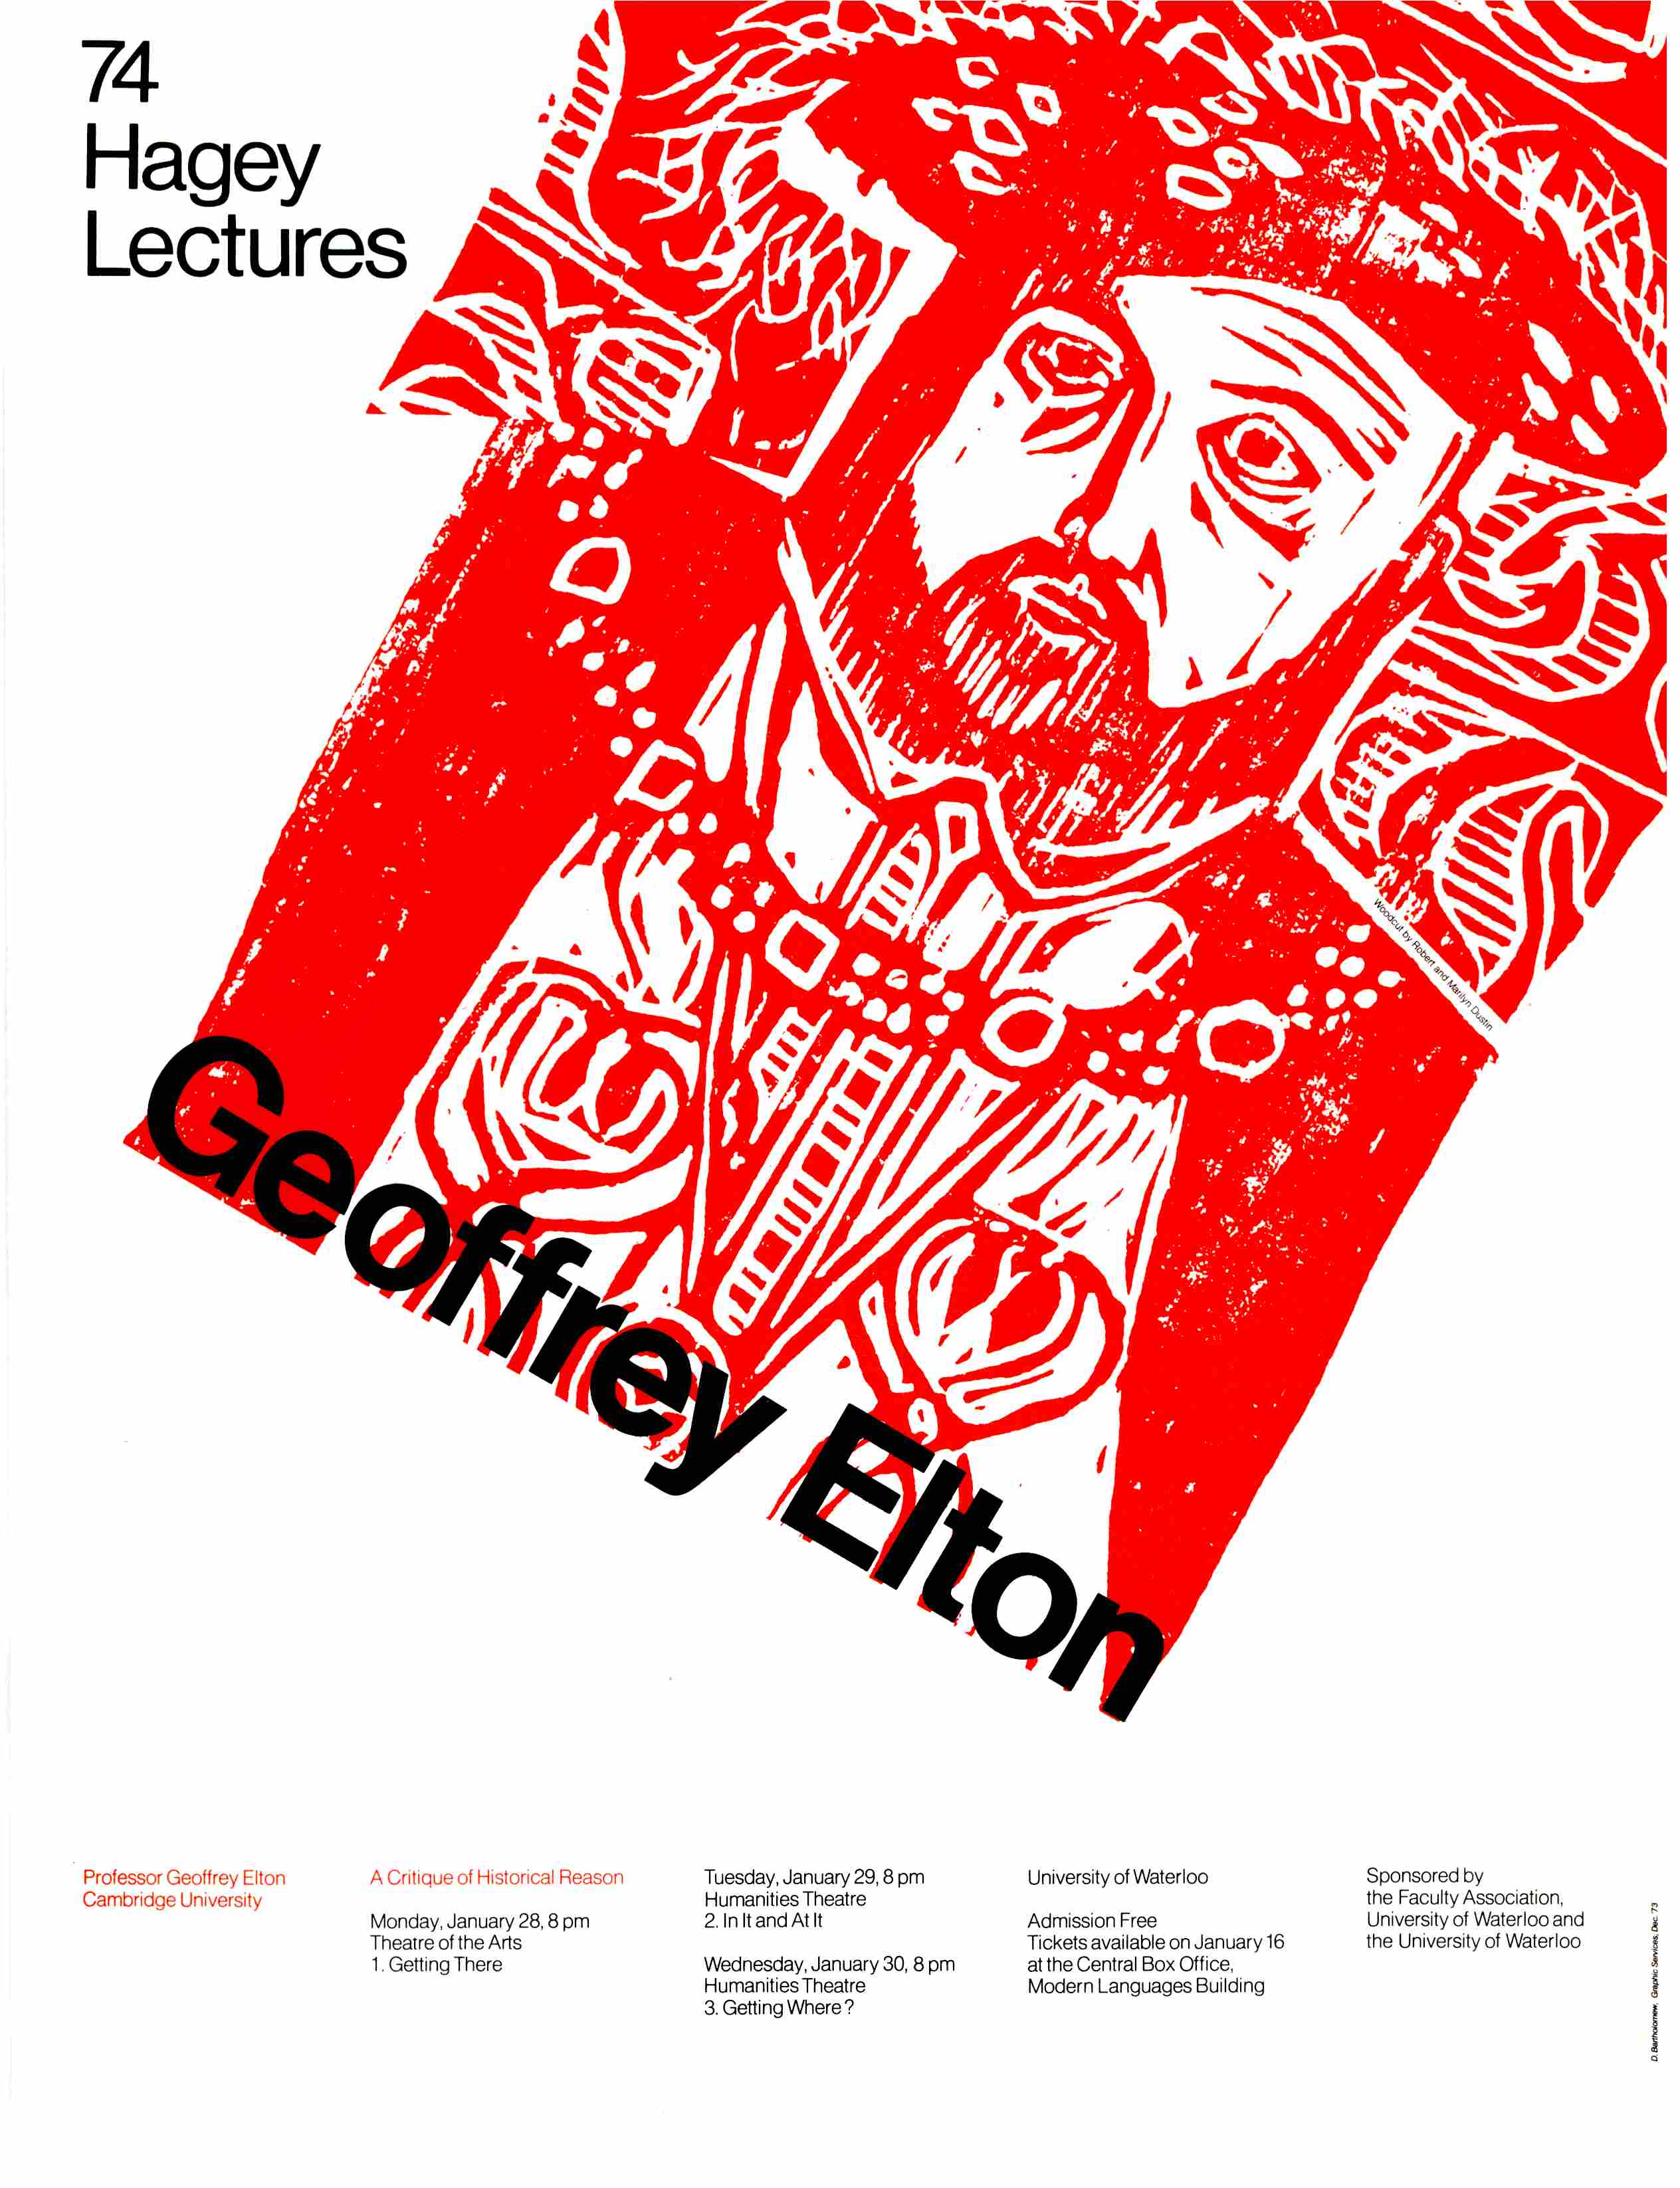 Geoffrey Elton 1974 Hagey Lecture poster